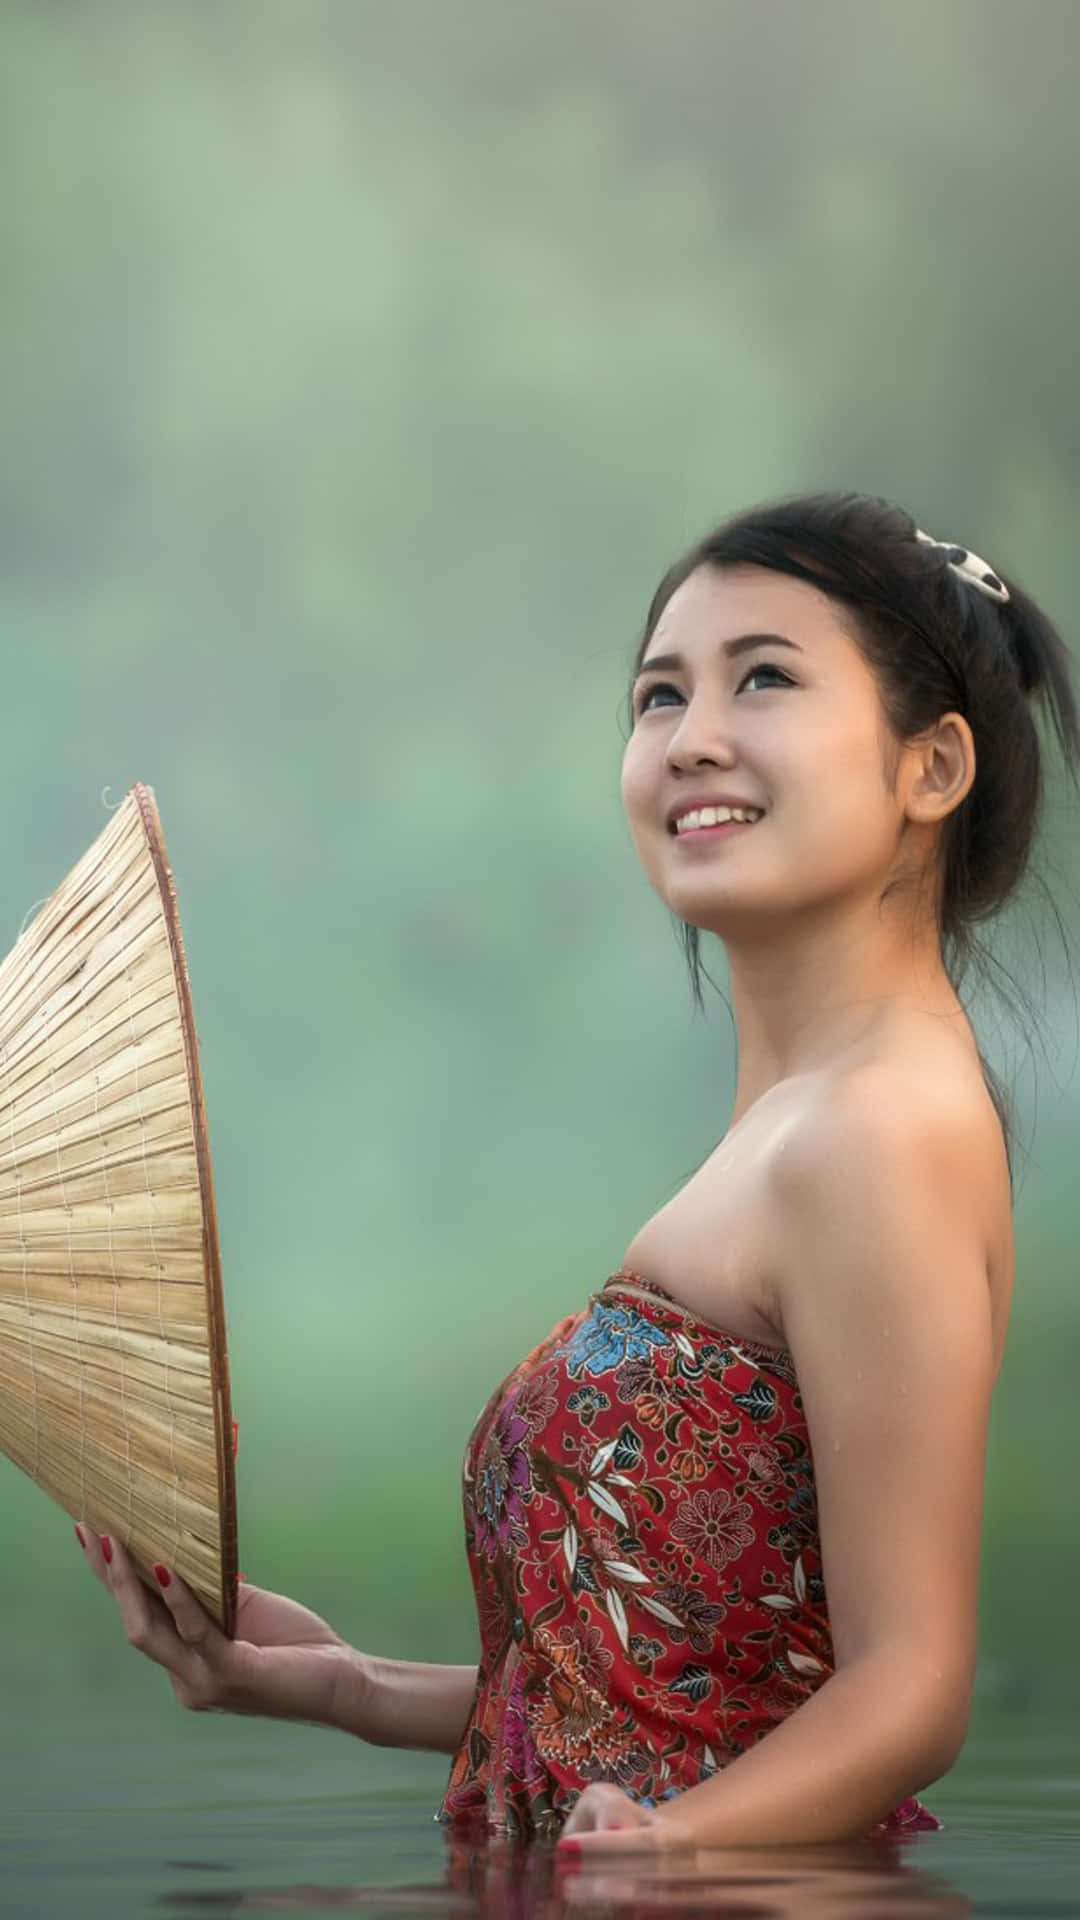 Download Photoshoot Of An Asian Girl Wallpaper 